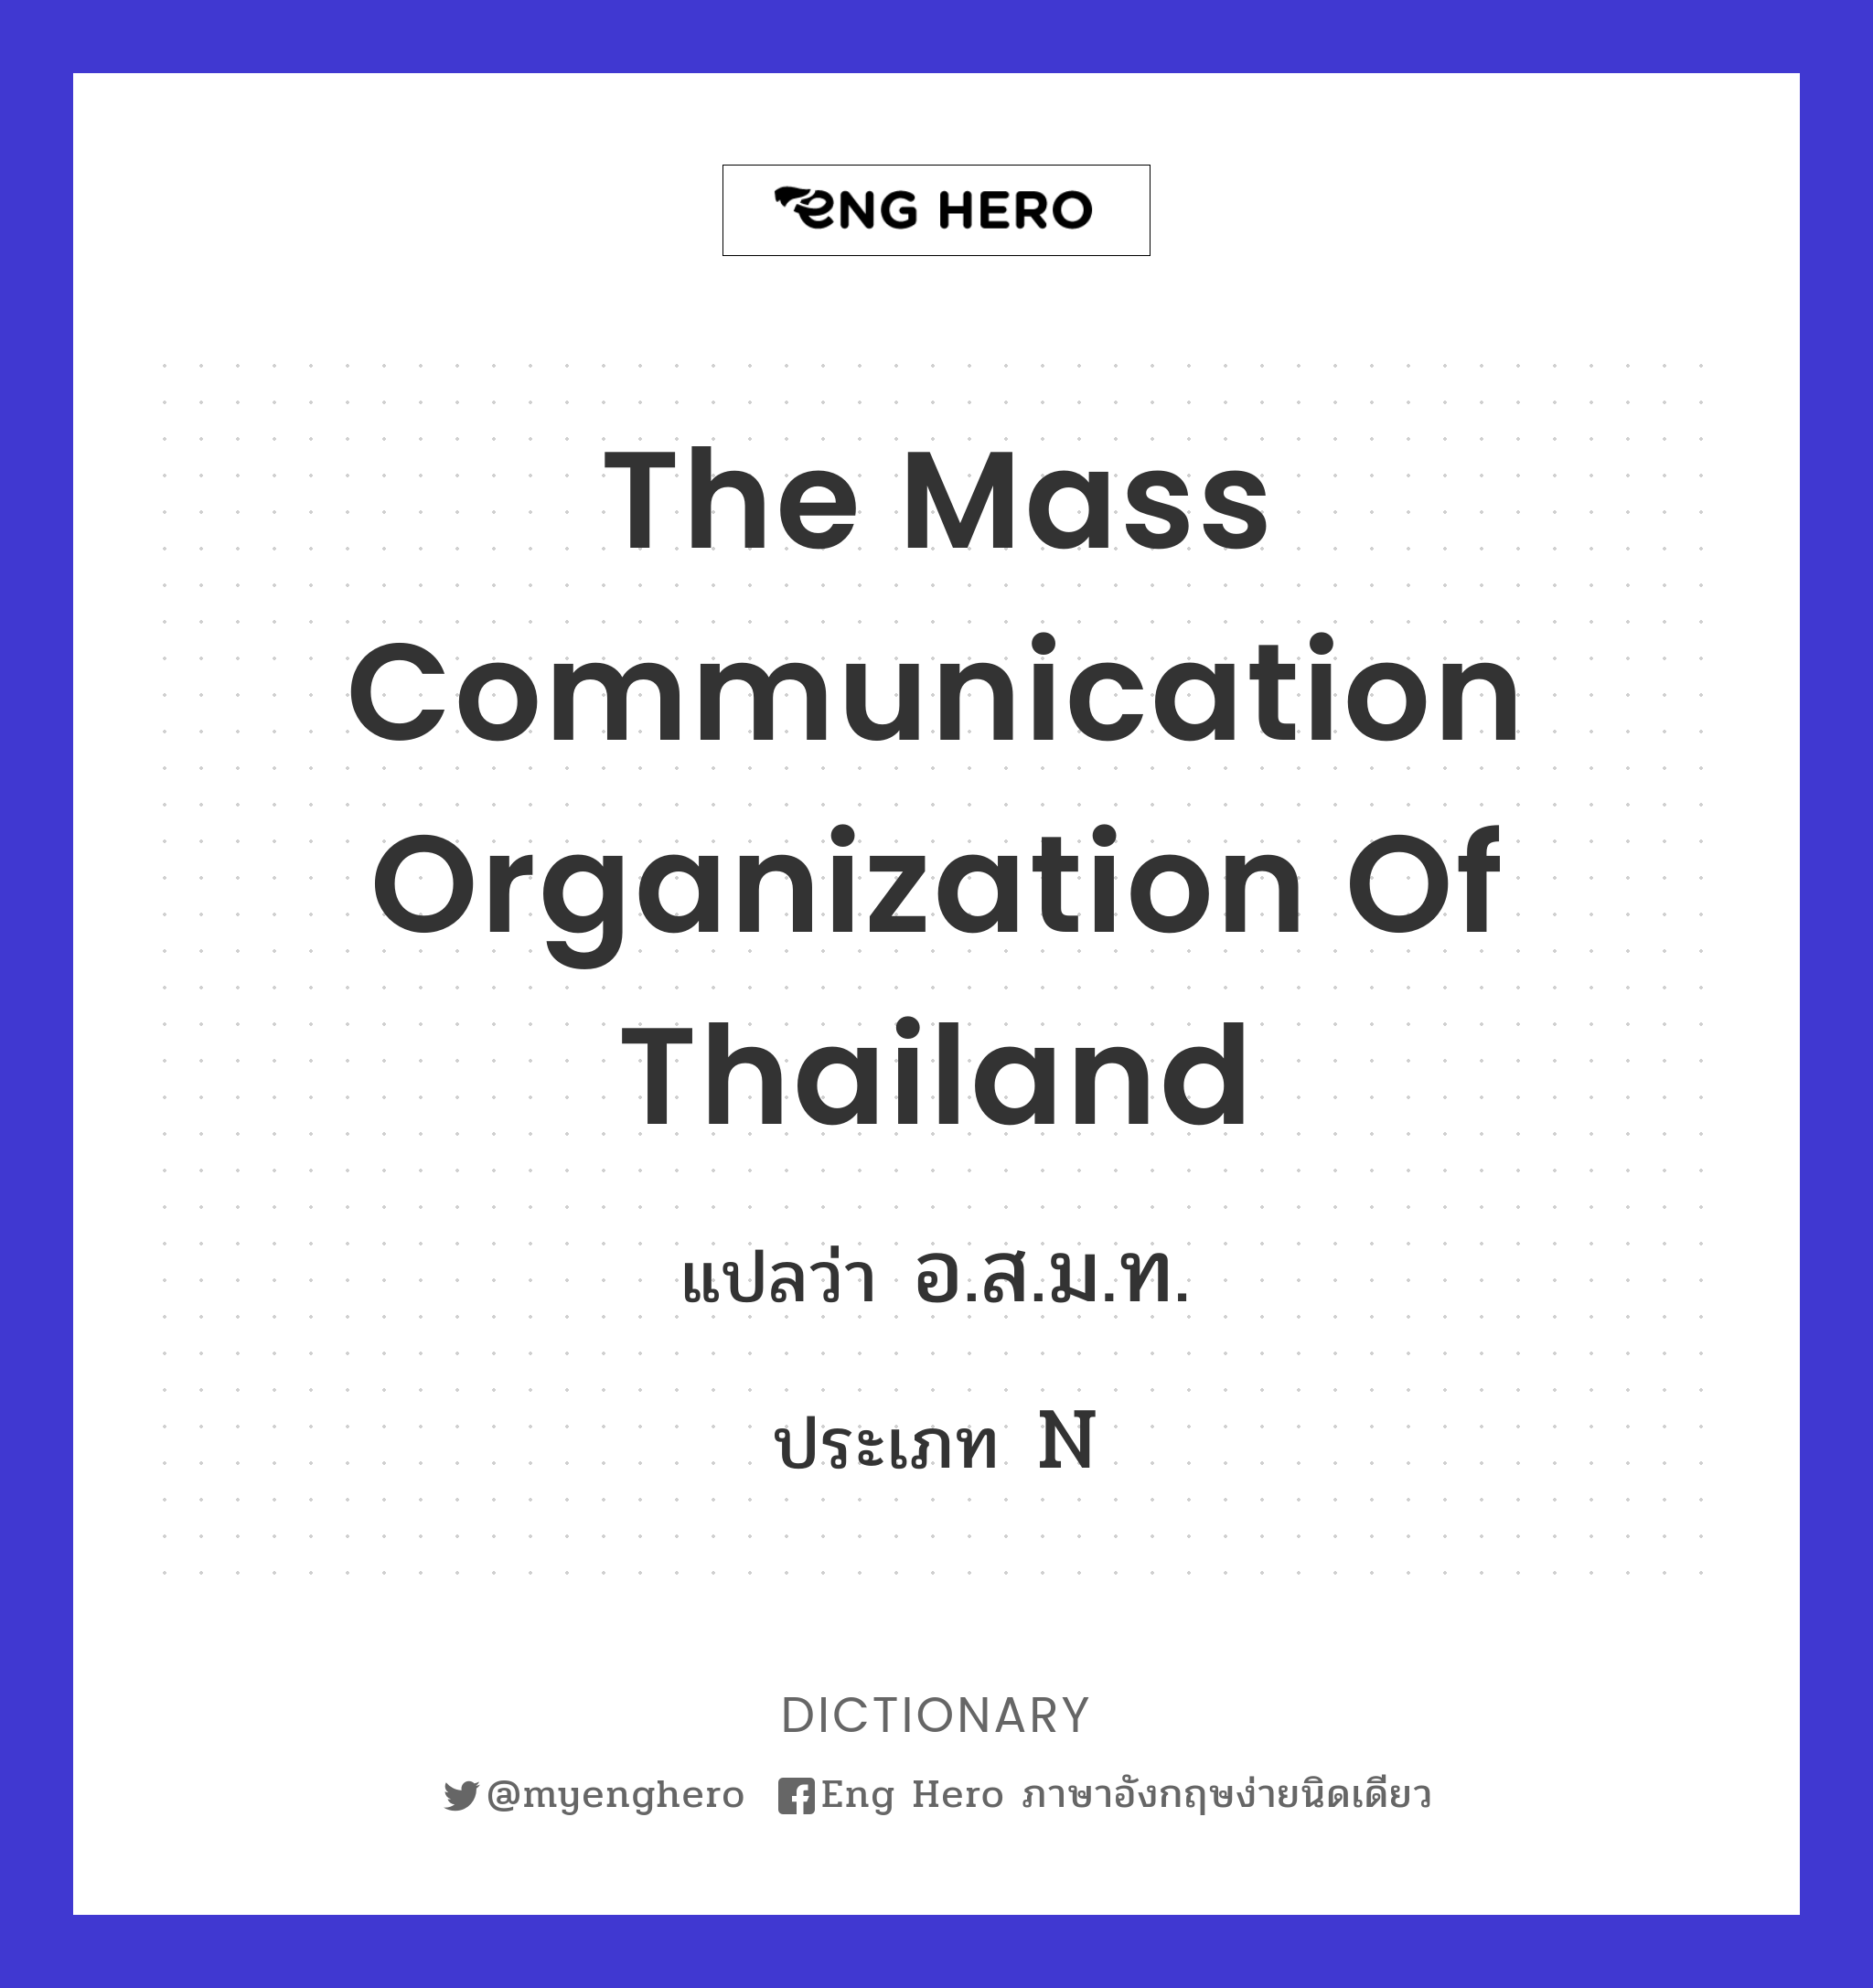 The Mass Communication Organization of Thailand